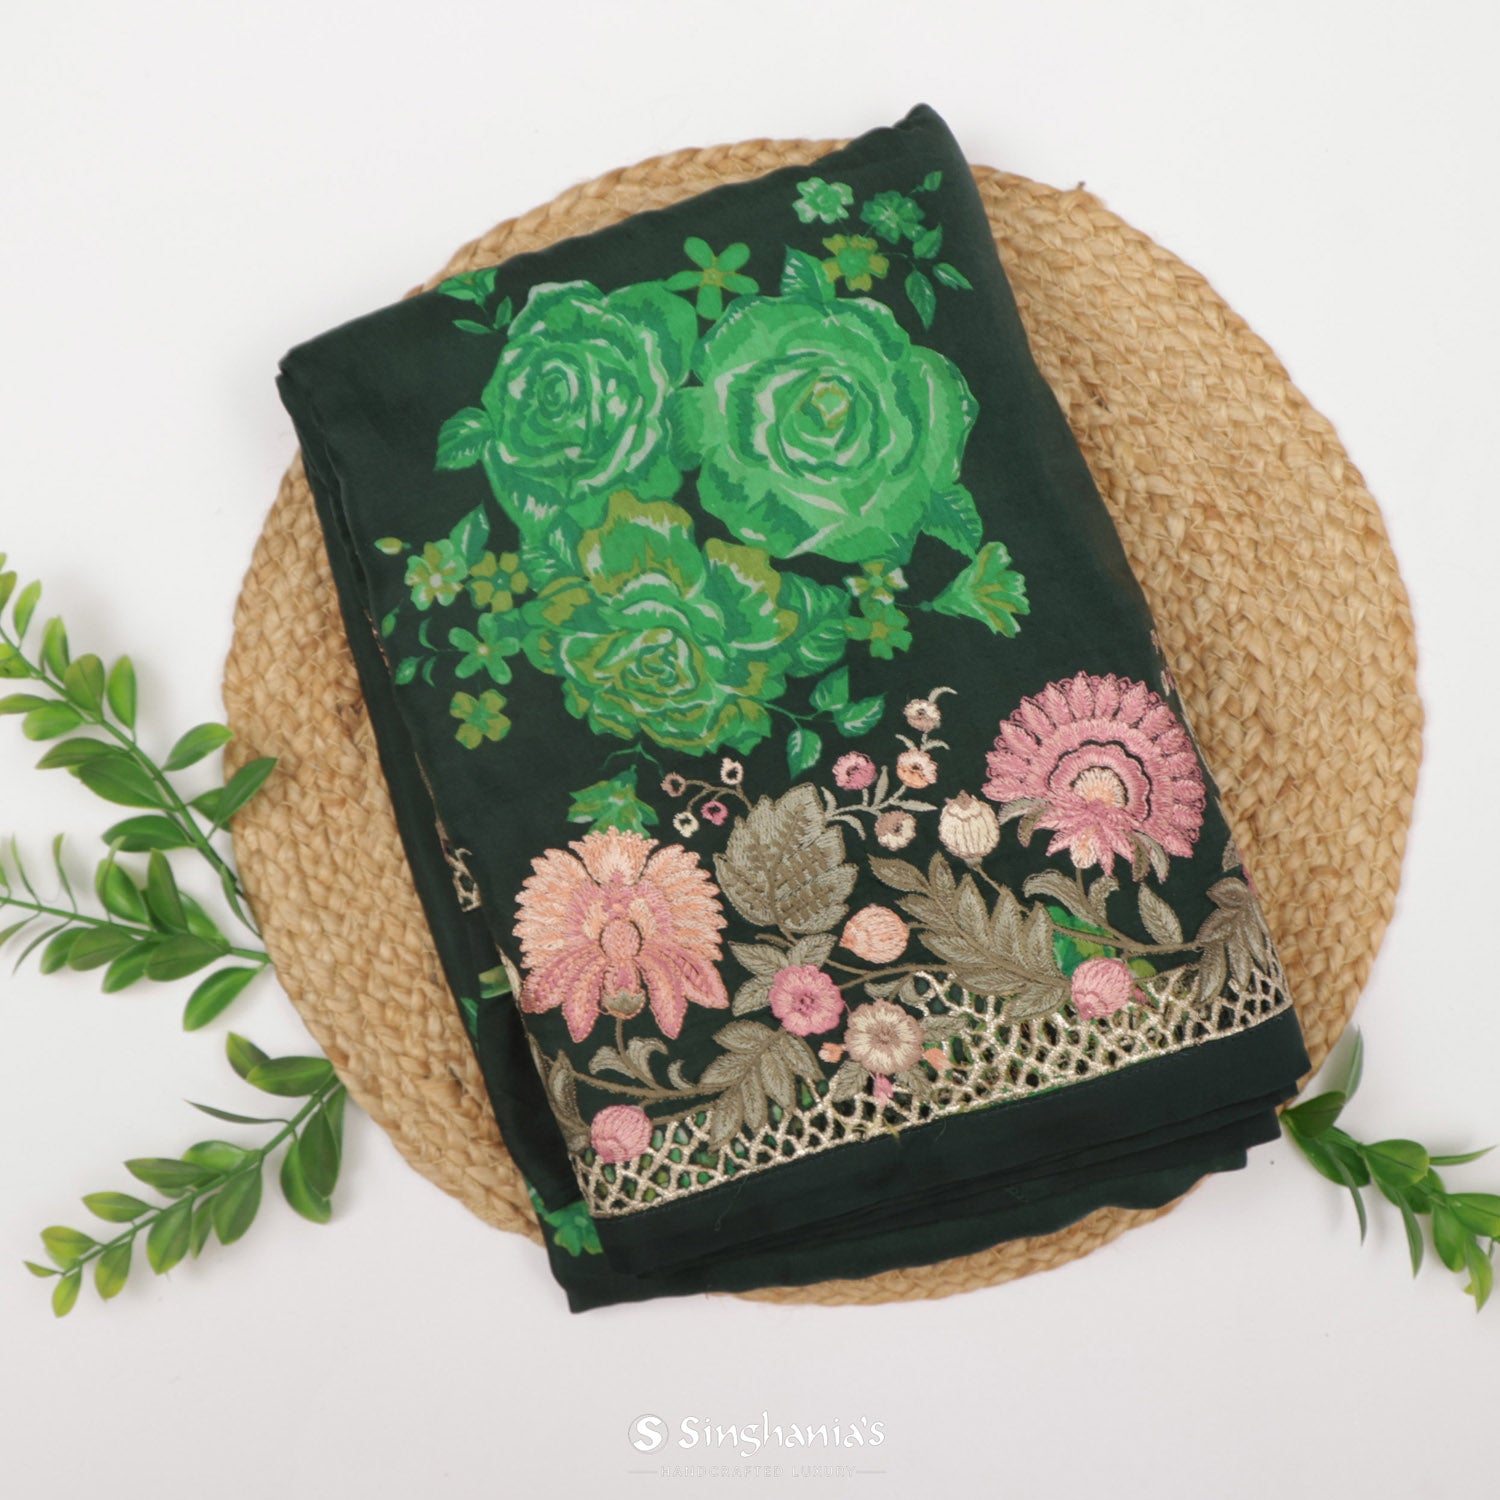 Medium Jungle Green Printed Satin Silk Saree With Floral Pattern